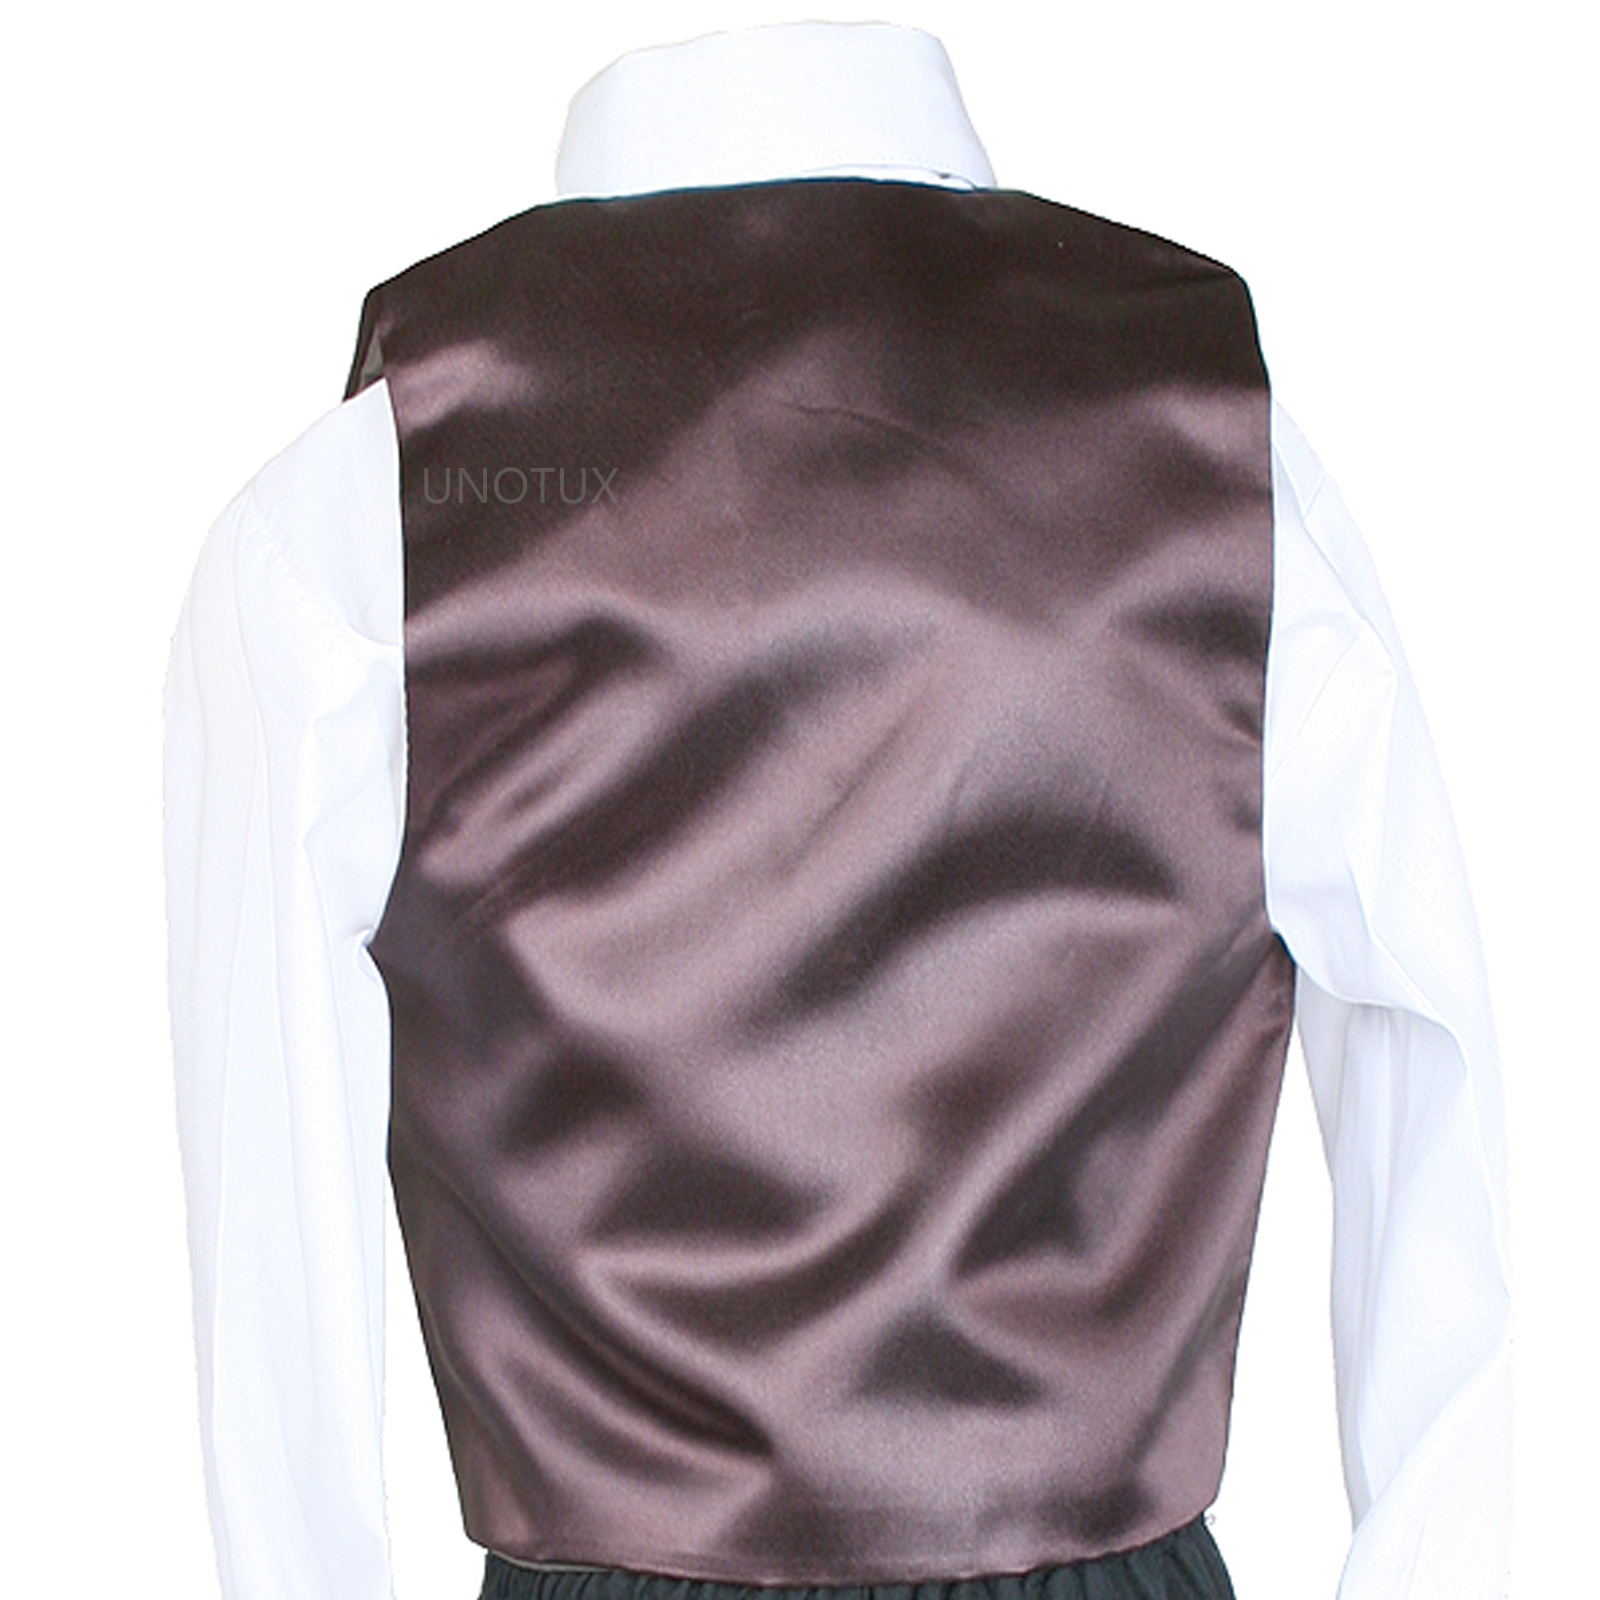 Leadertux 5 6 7 8 10 12 14 16 18 20 Brown 2pc only Vest + Necktie set for Boy Kid Child Teen size matching Formal Tuxedo Suit